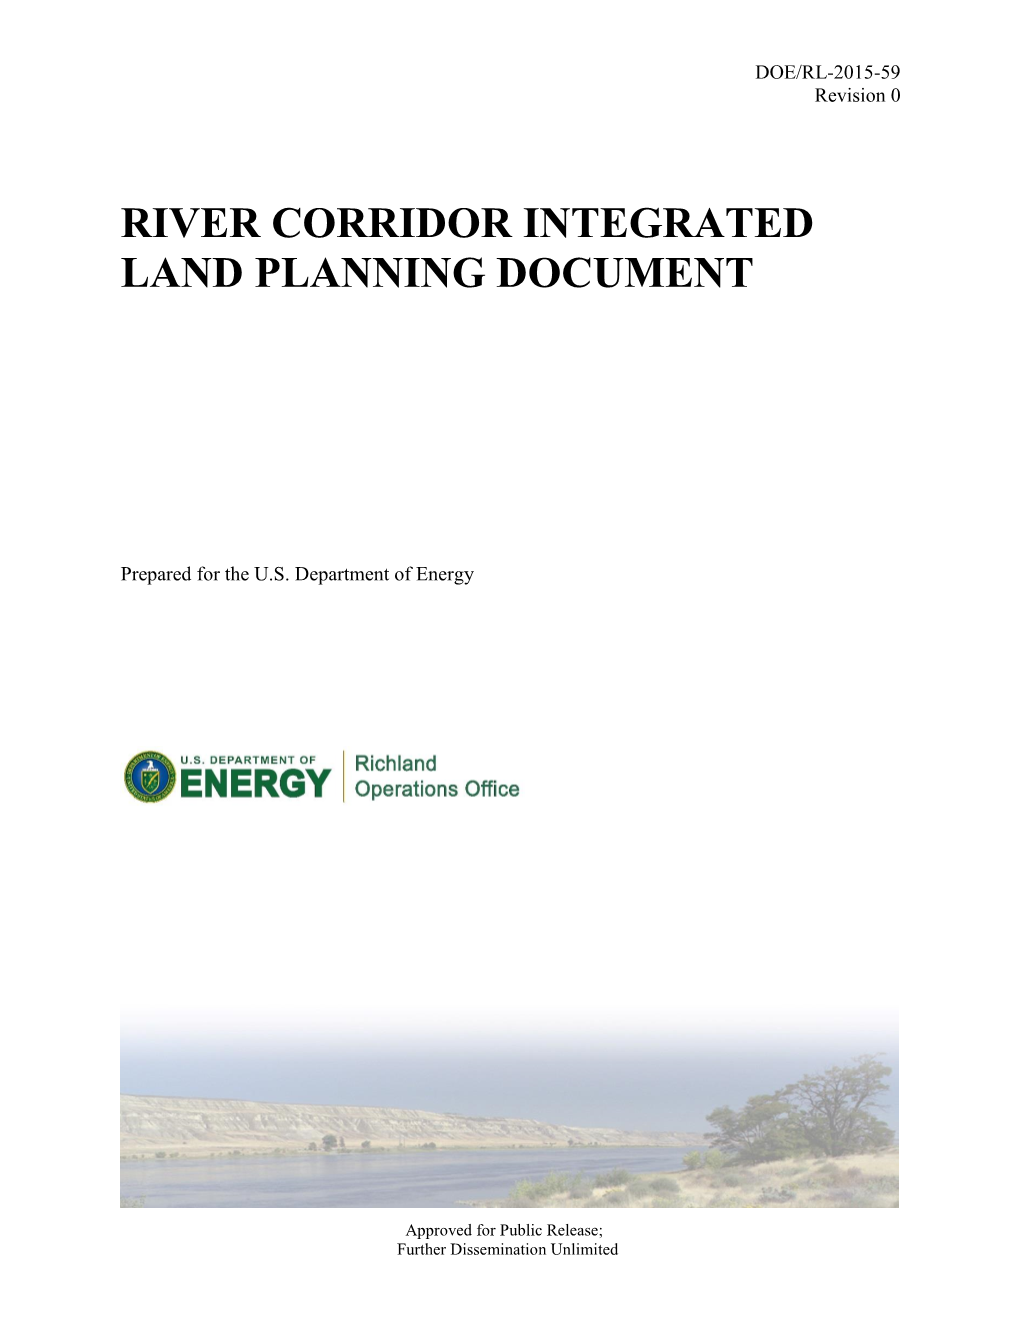 River Corridor Integrated Land Planning Document